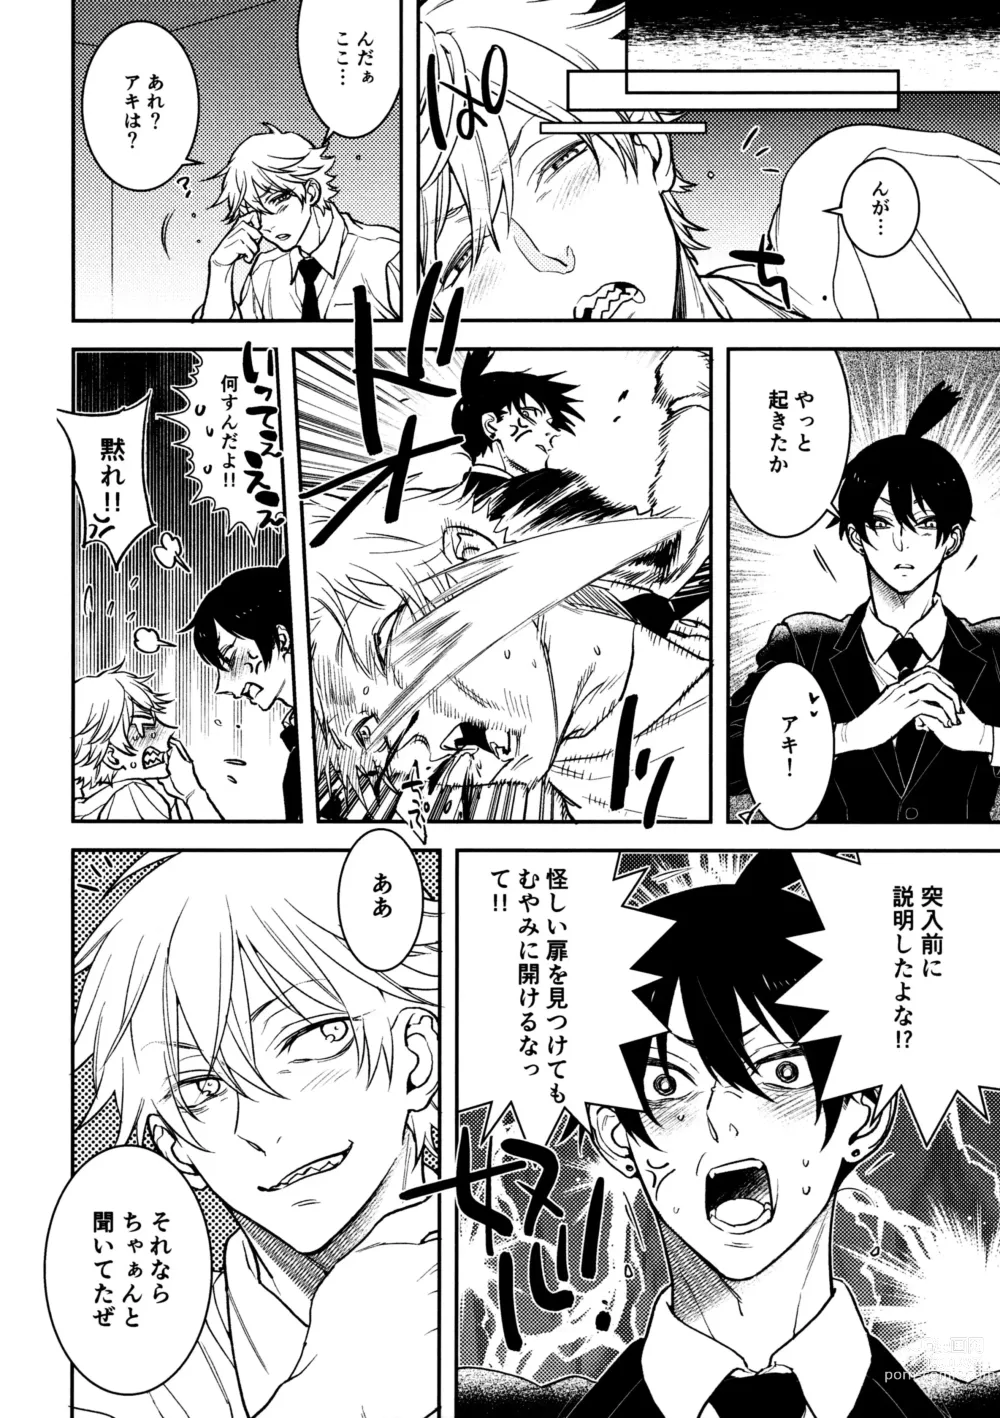 Page 5 of doujinshi Hajimete wa Zettee Aki ga Ii